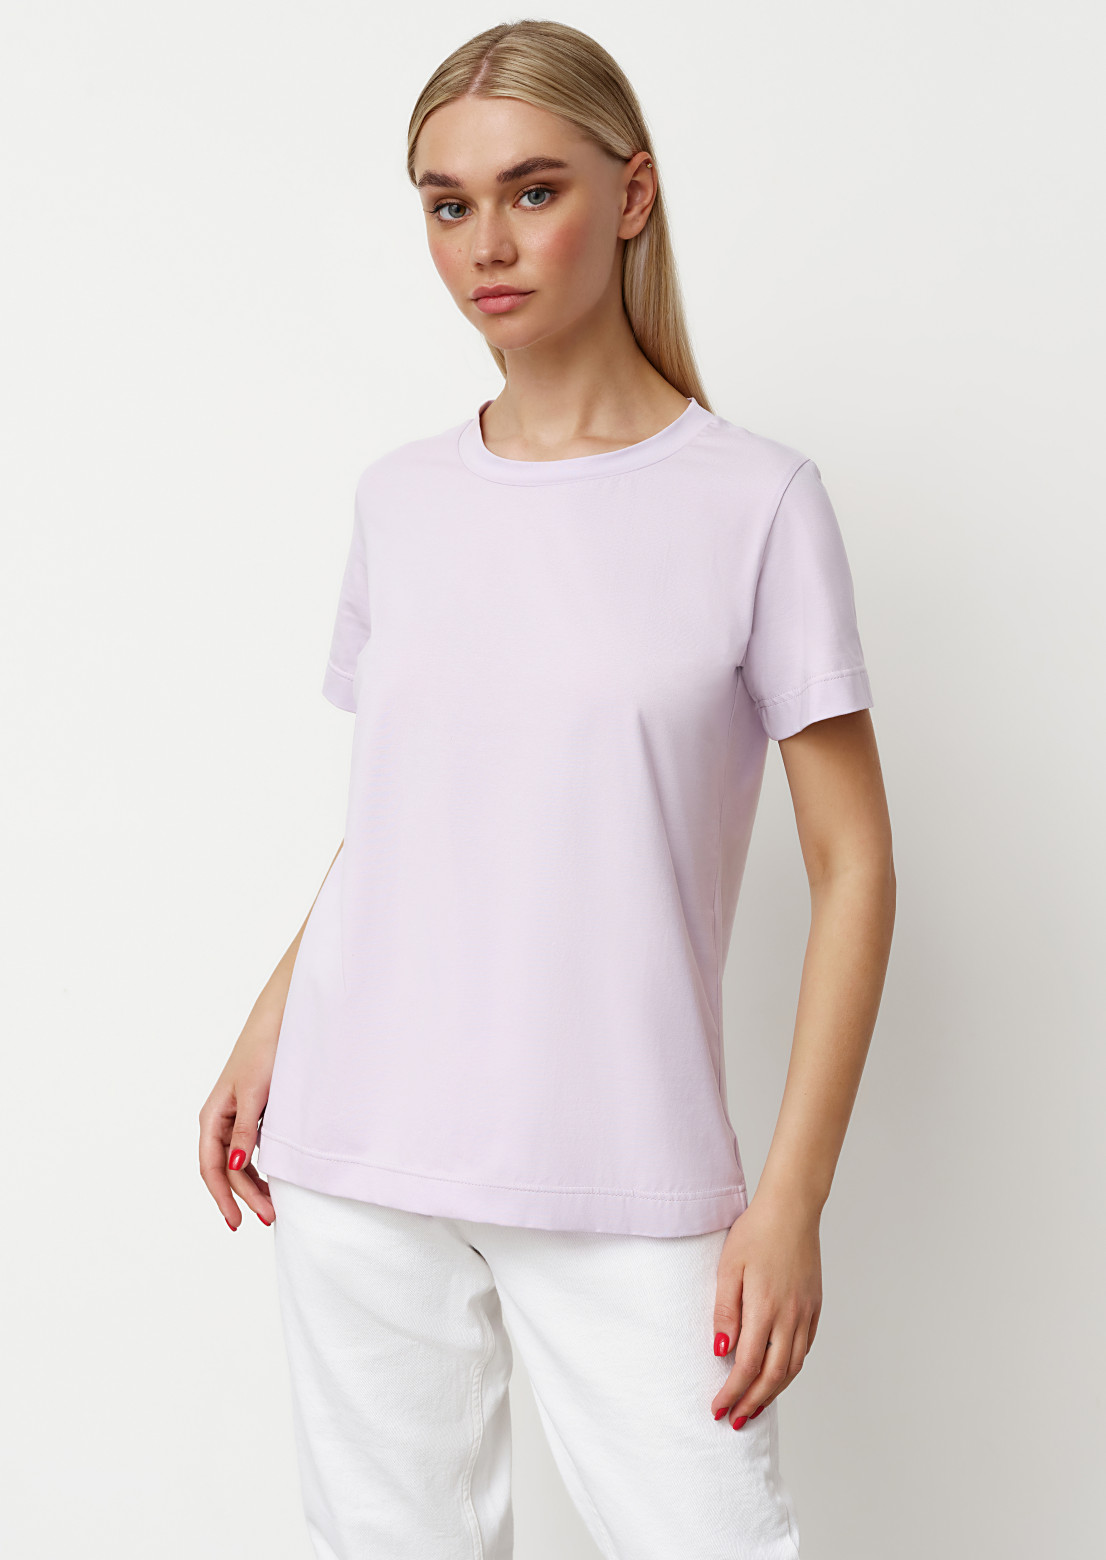 Lavender blank T-shirt